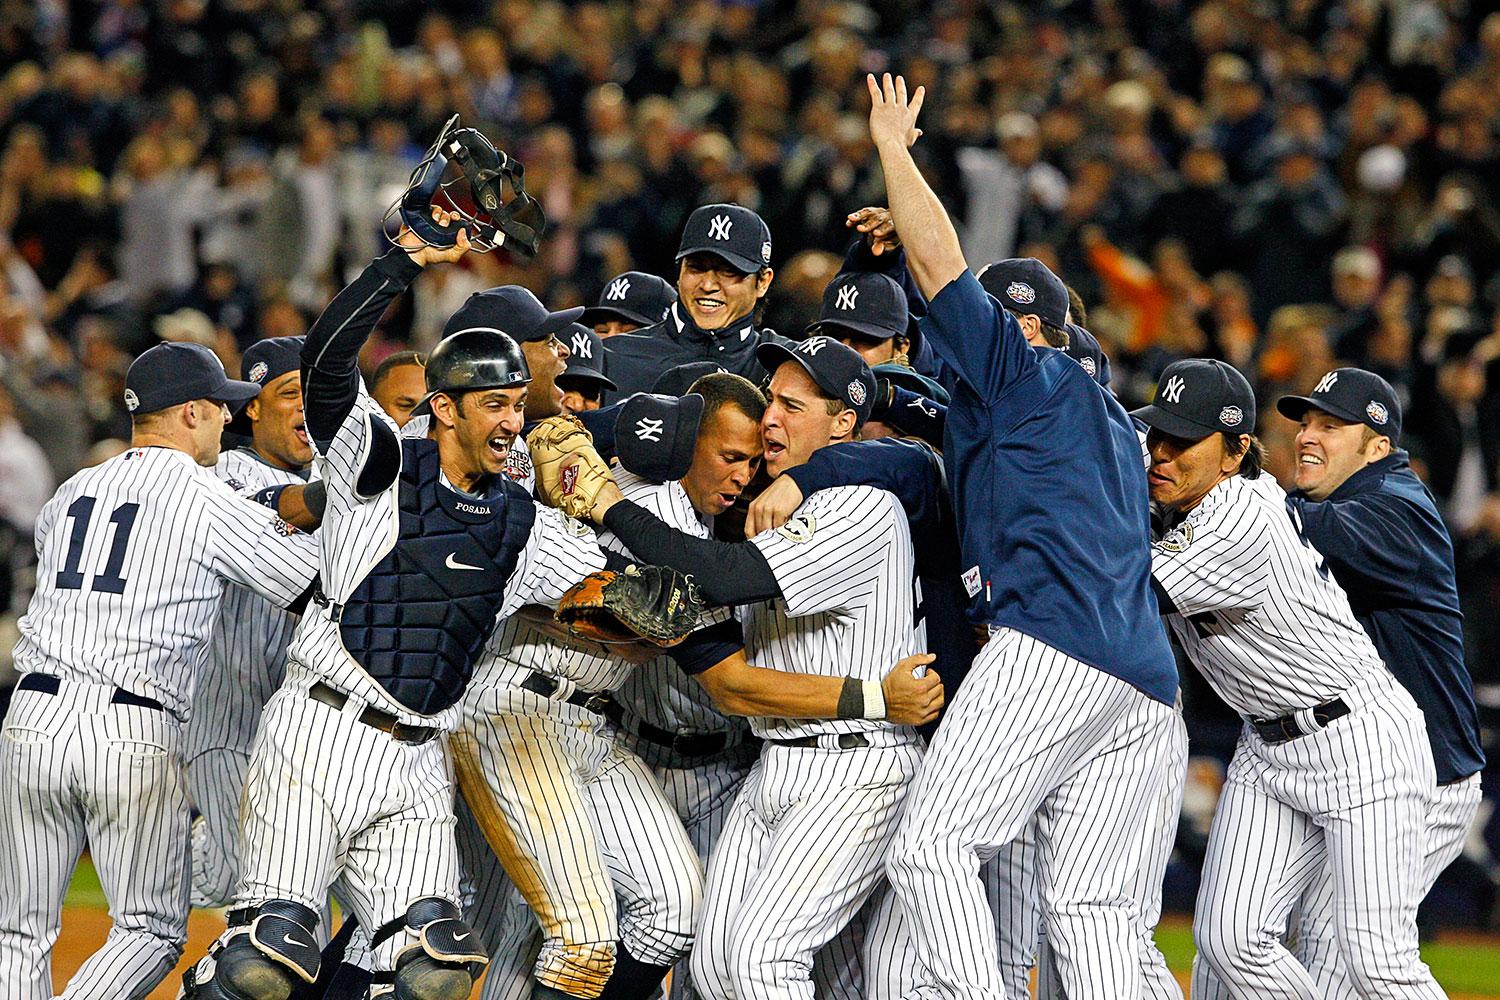 Yankees photographer Ariele Goldman Hecht World Series Game 6